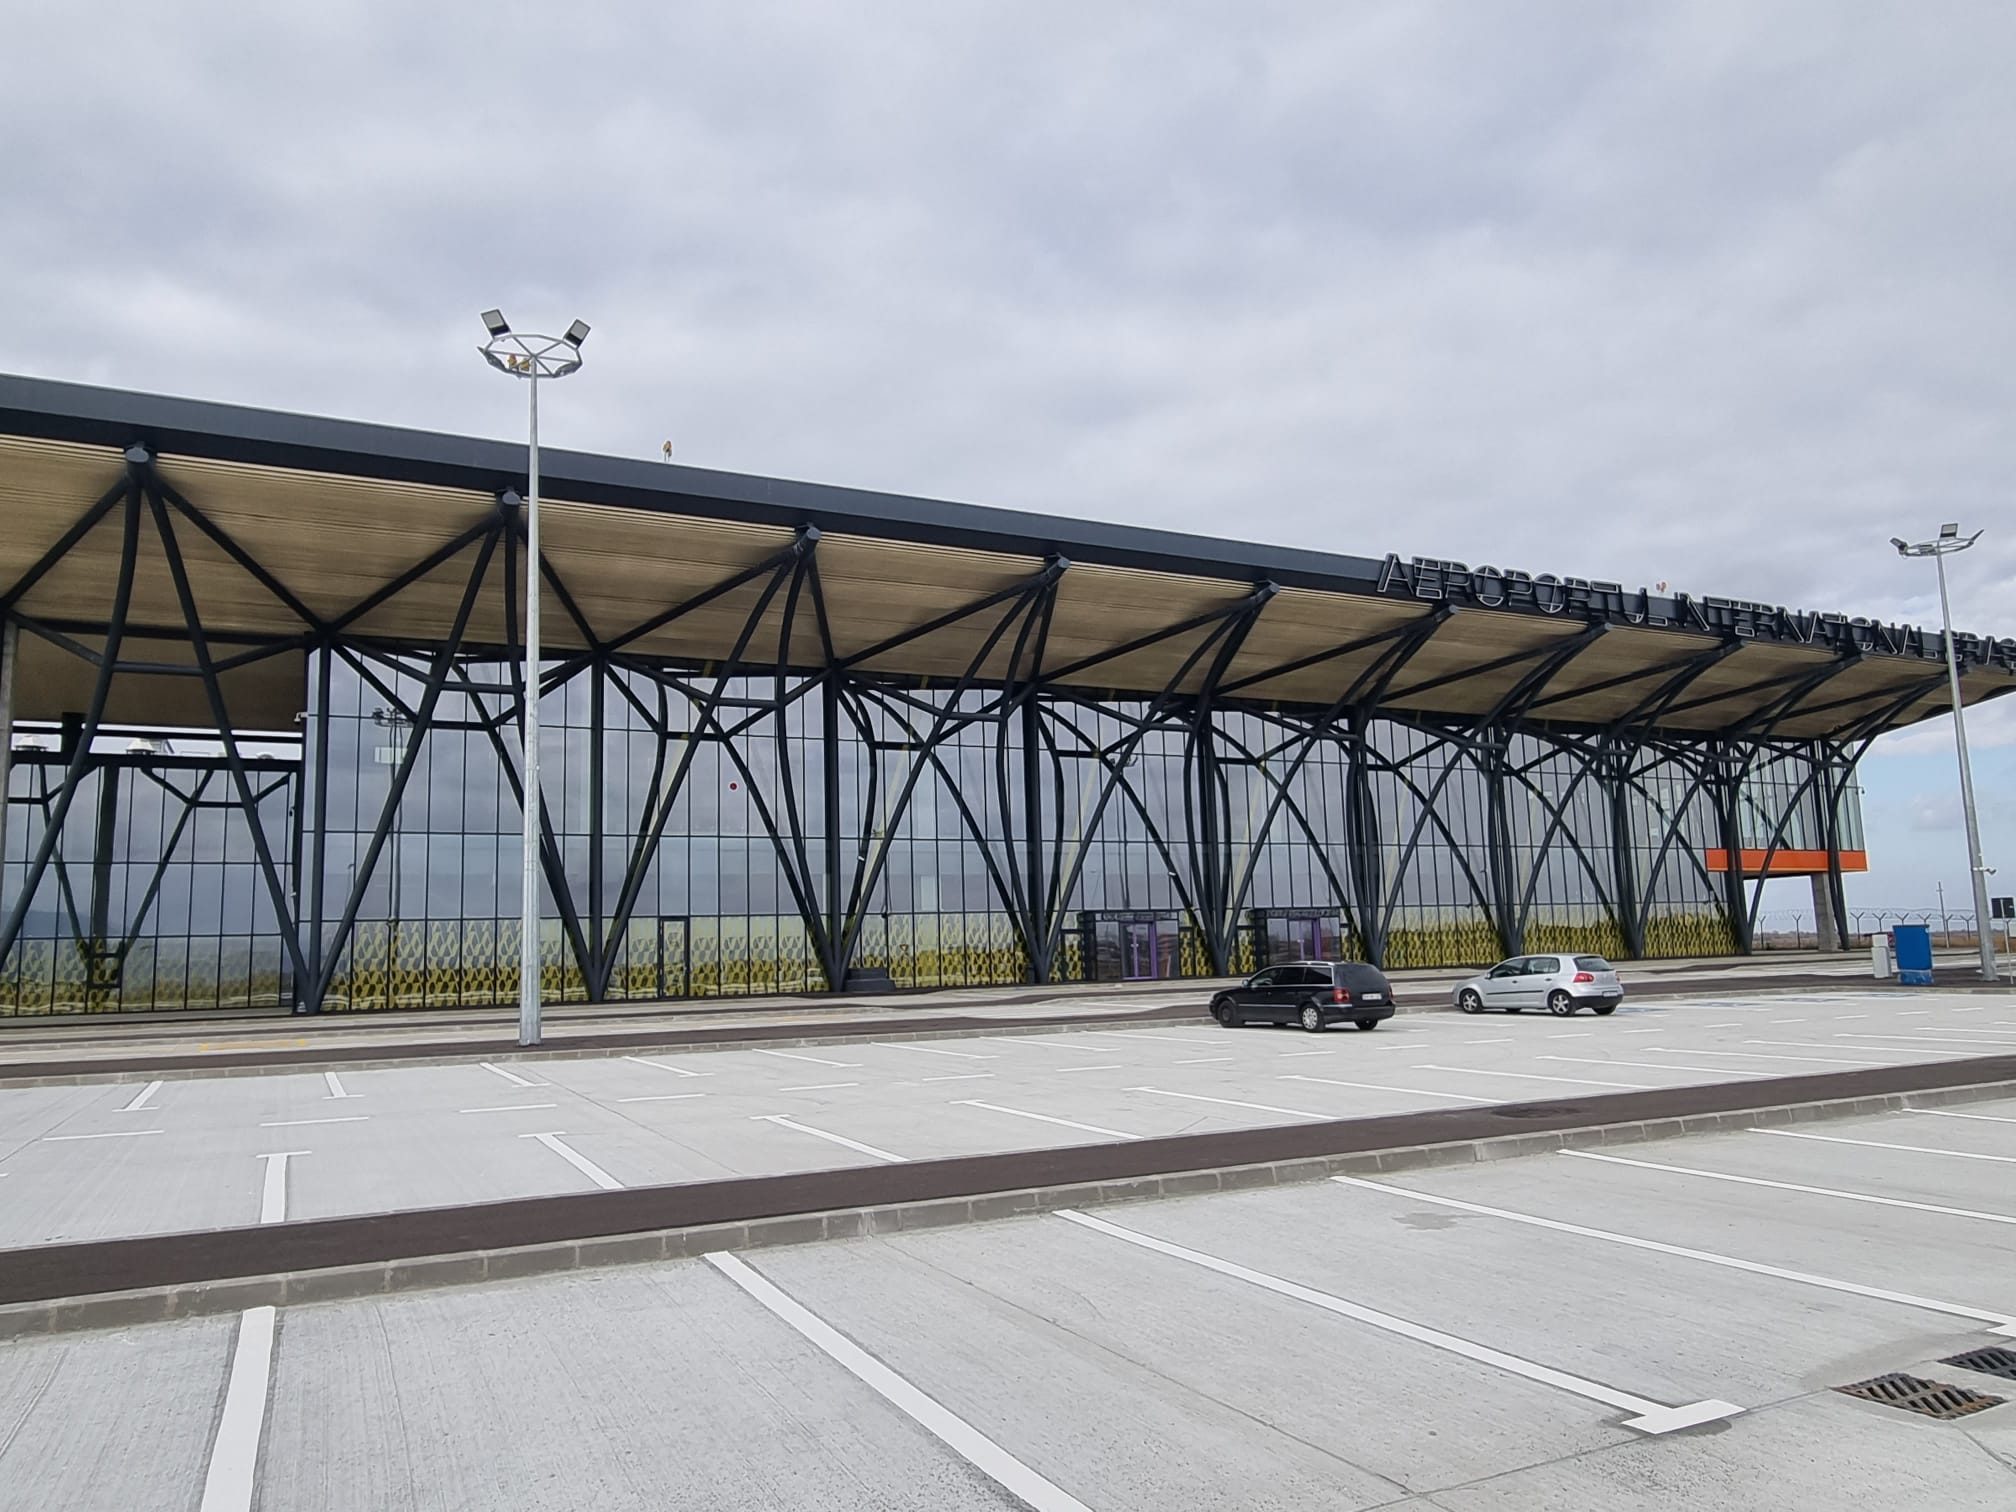 Încep angajările la Aeroportul Braşov | MyTex.ro